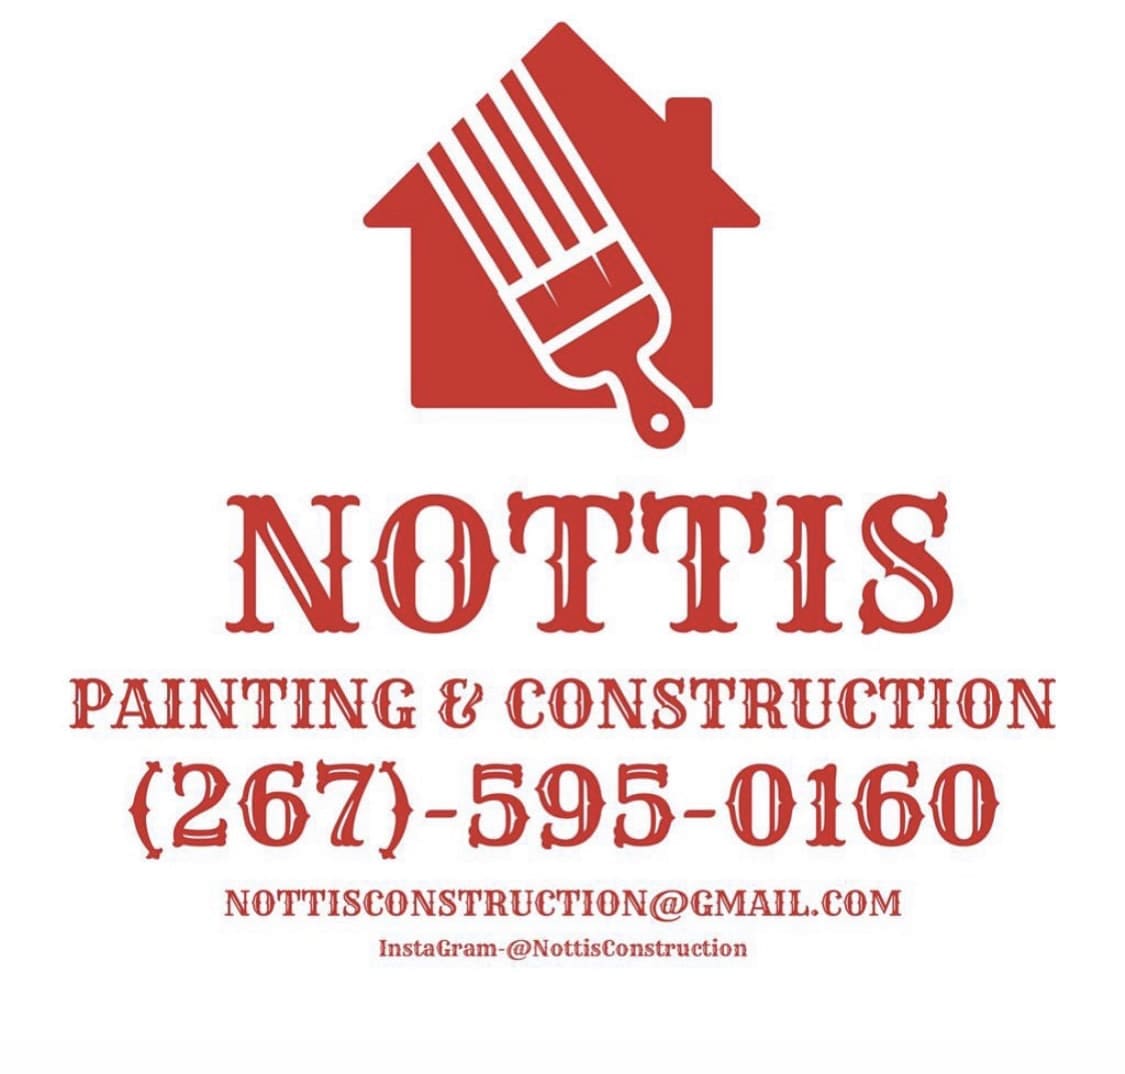 Nottis Construction